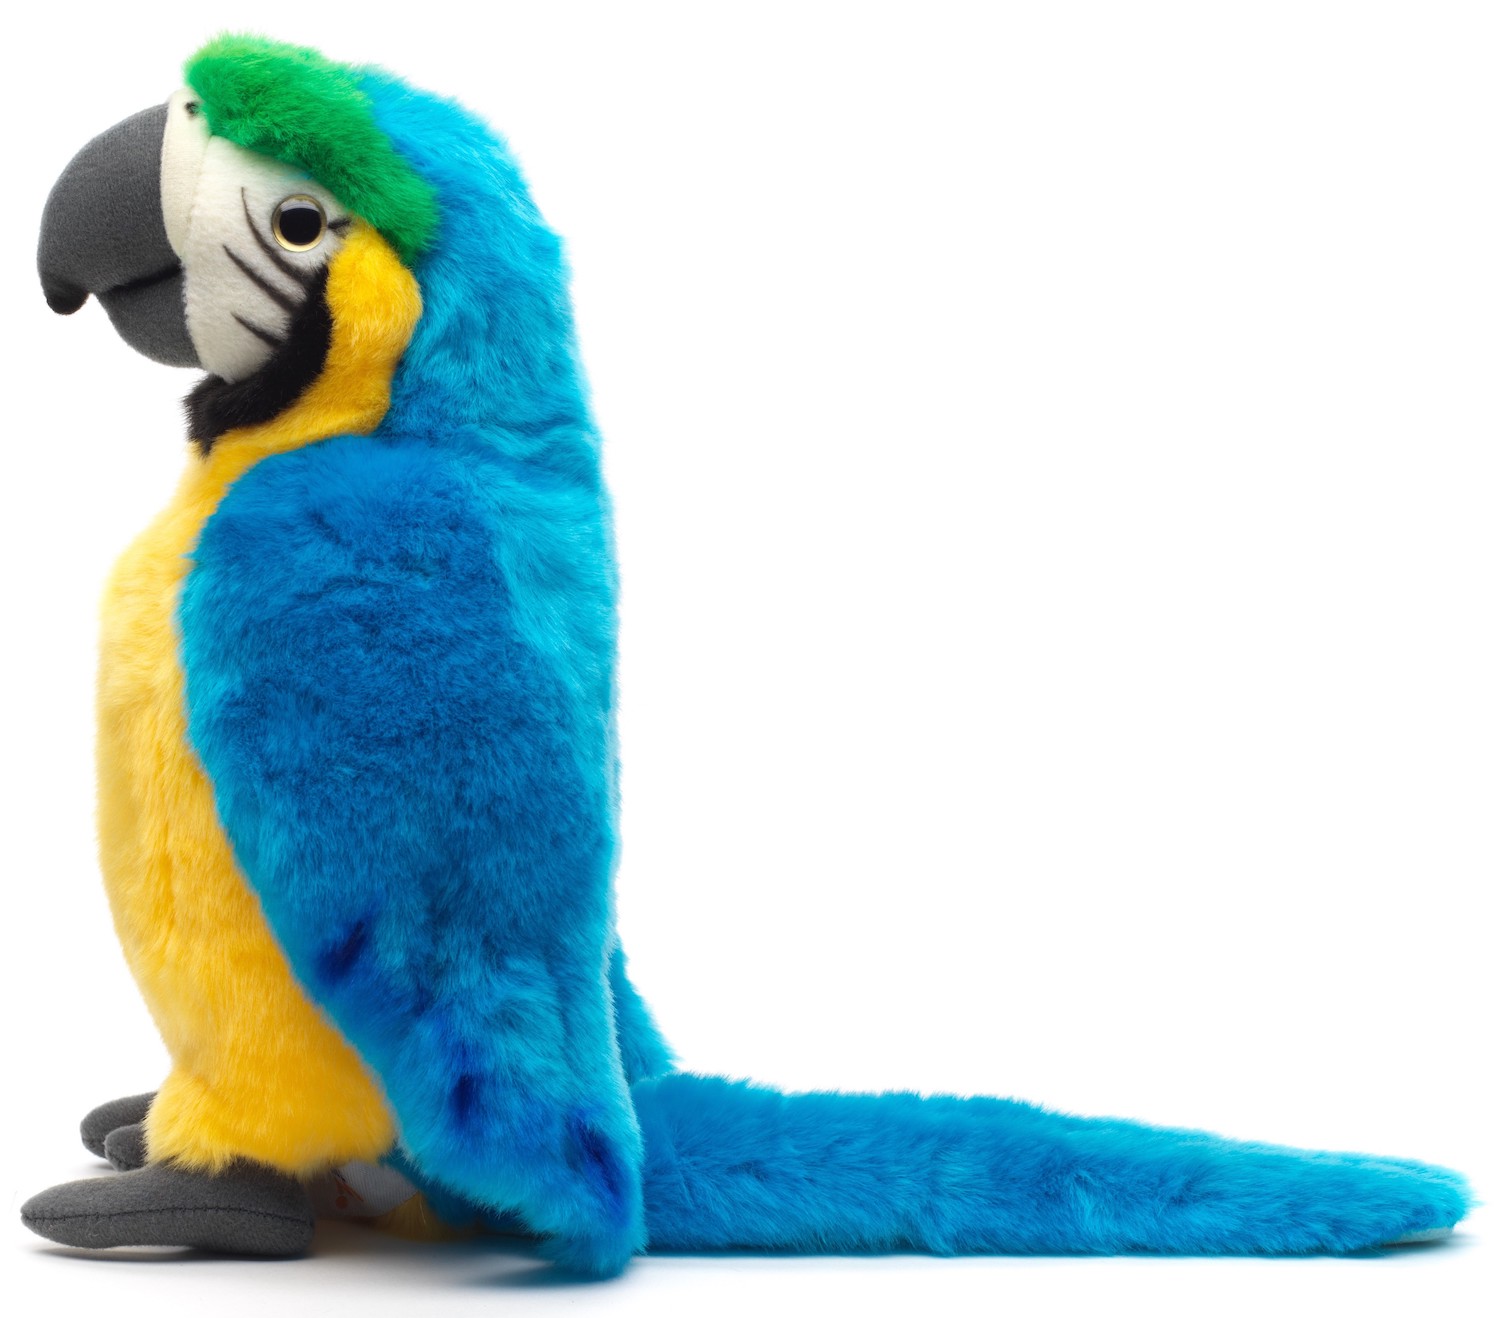  Parrot - 28 cm (height) - Plush bird 